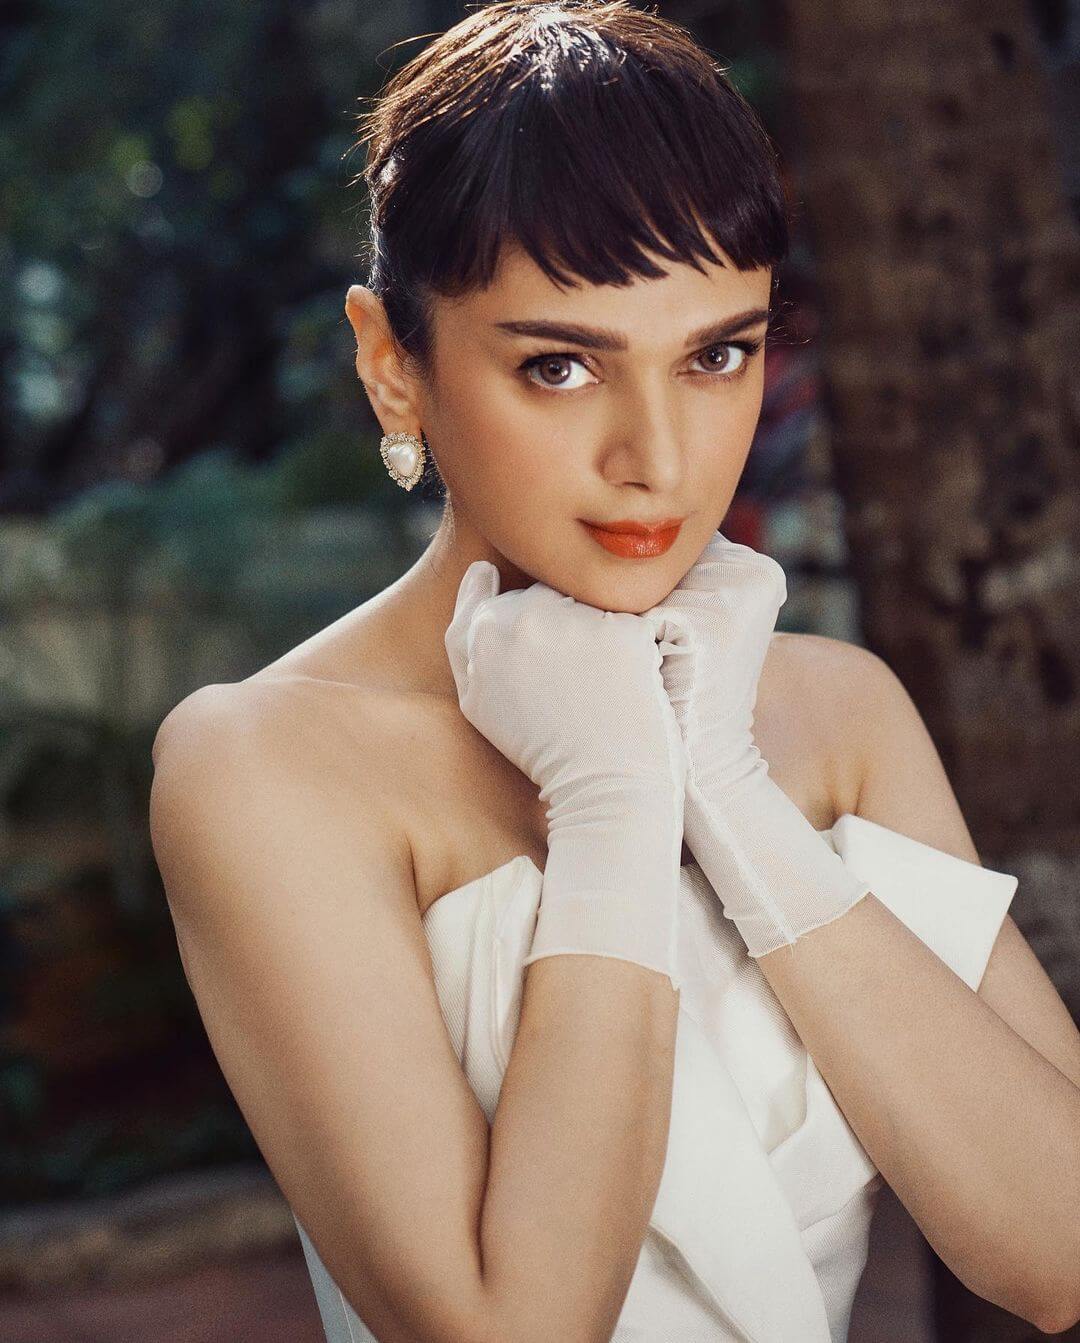 Aditi Rao Hydari Channels Audrey Hepburn In Stunning Photo: From her pixie bangs to her pearls Aditi IS Audrey. Photo Credit: www.instagram.com